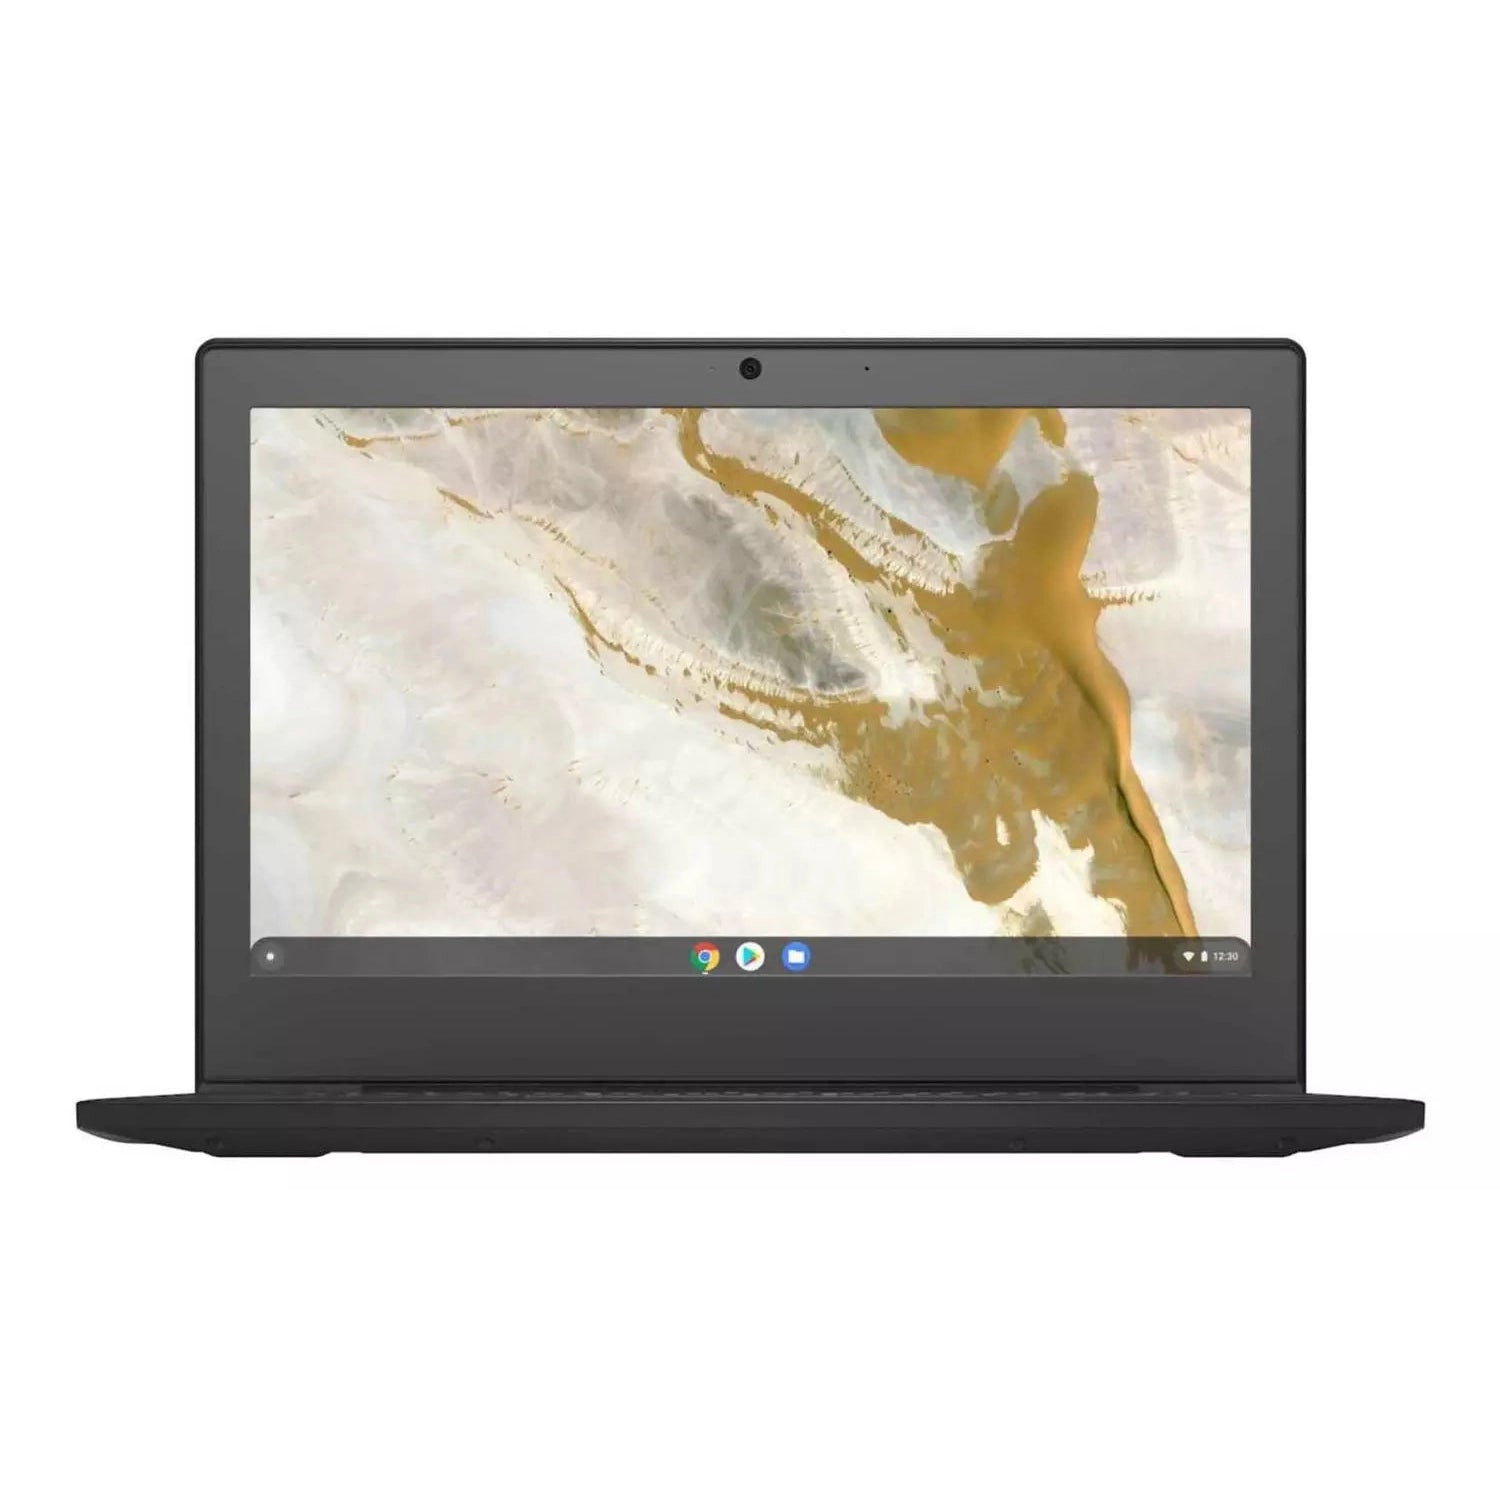 Lenovo IdeaPad 3 82BA0007UK Laptop, Intel Celeron, 4GB RAM, 64GB eMMC, 11.6", Black